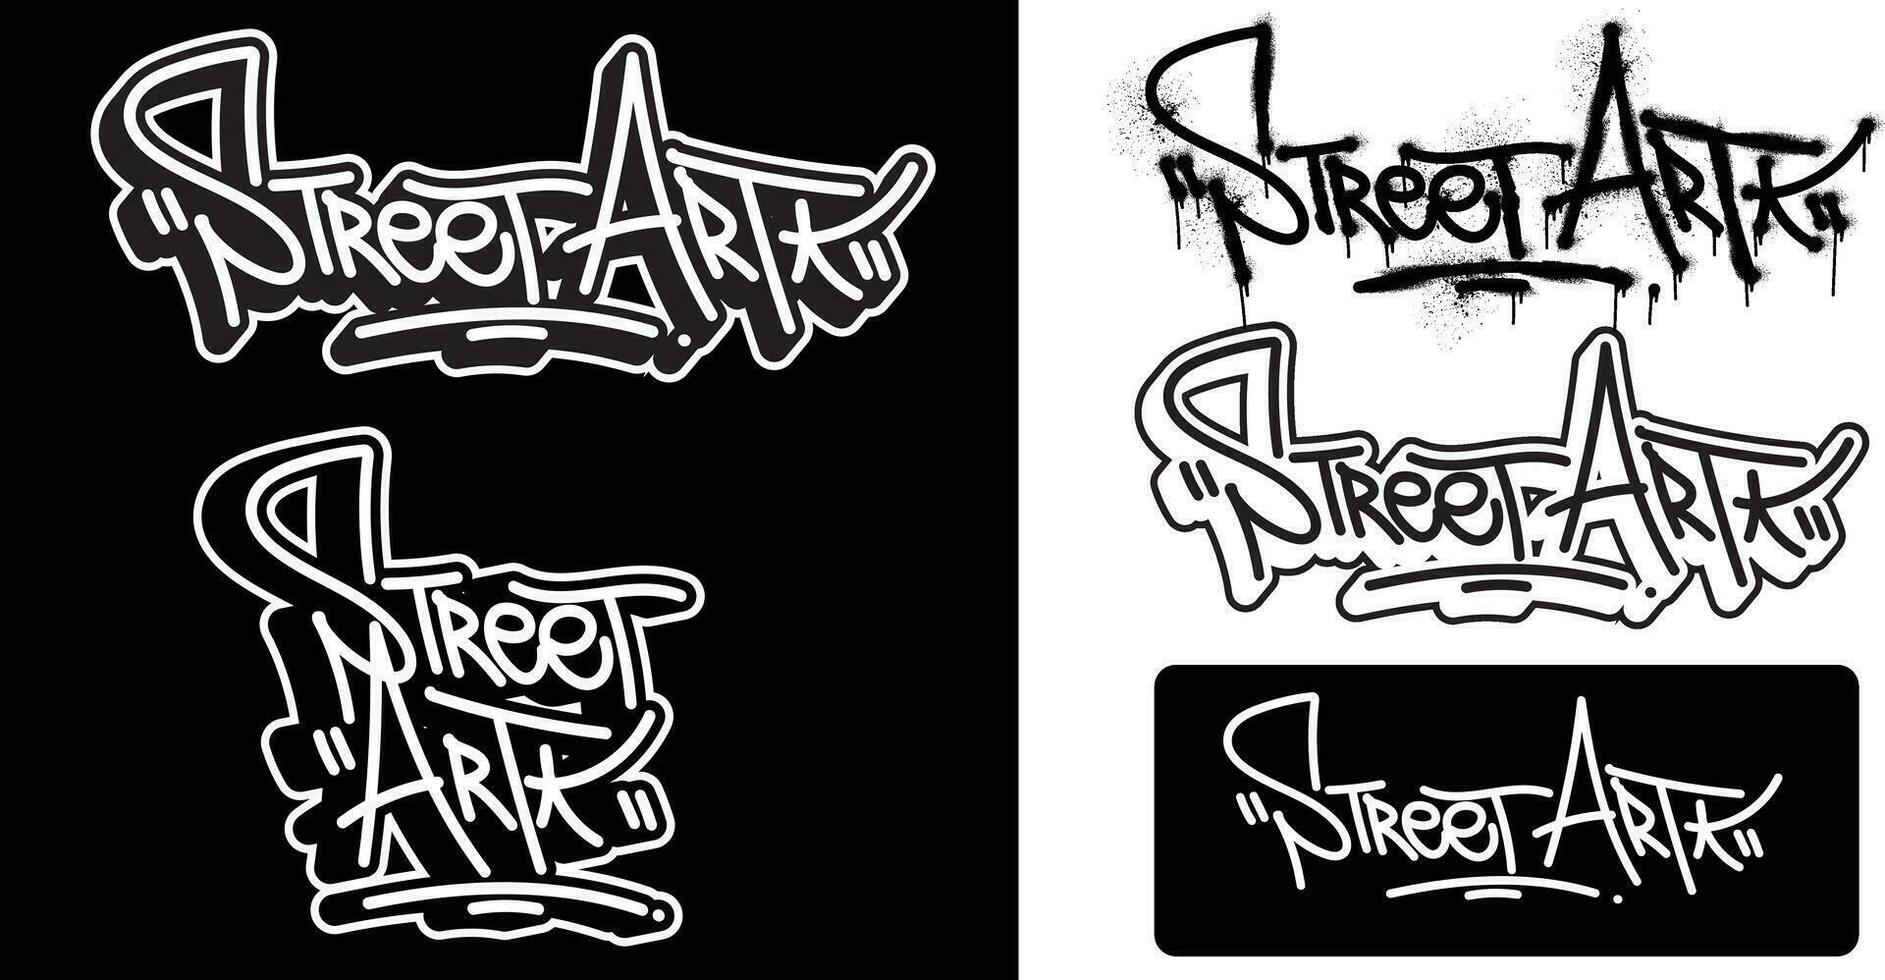 städtisch Straße Kunst HipHop Graffiti Entwürfe. Strassenmode Typografie Vektor Illustrationen.